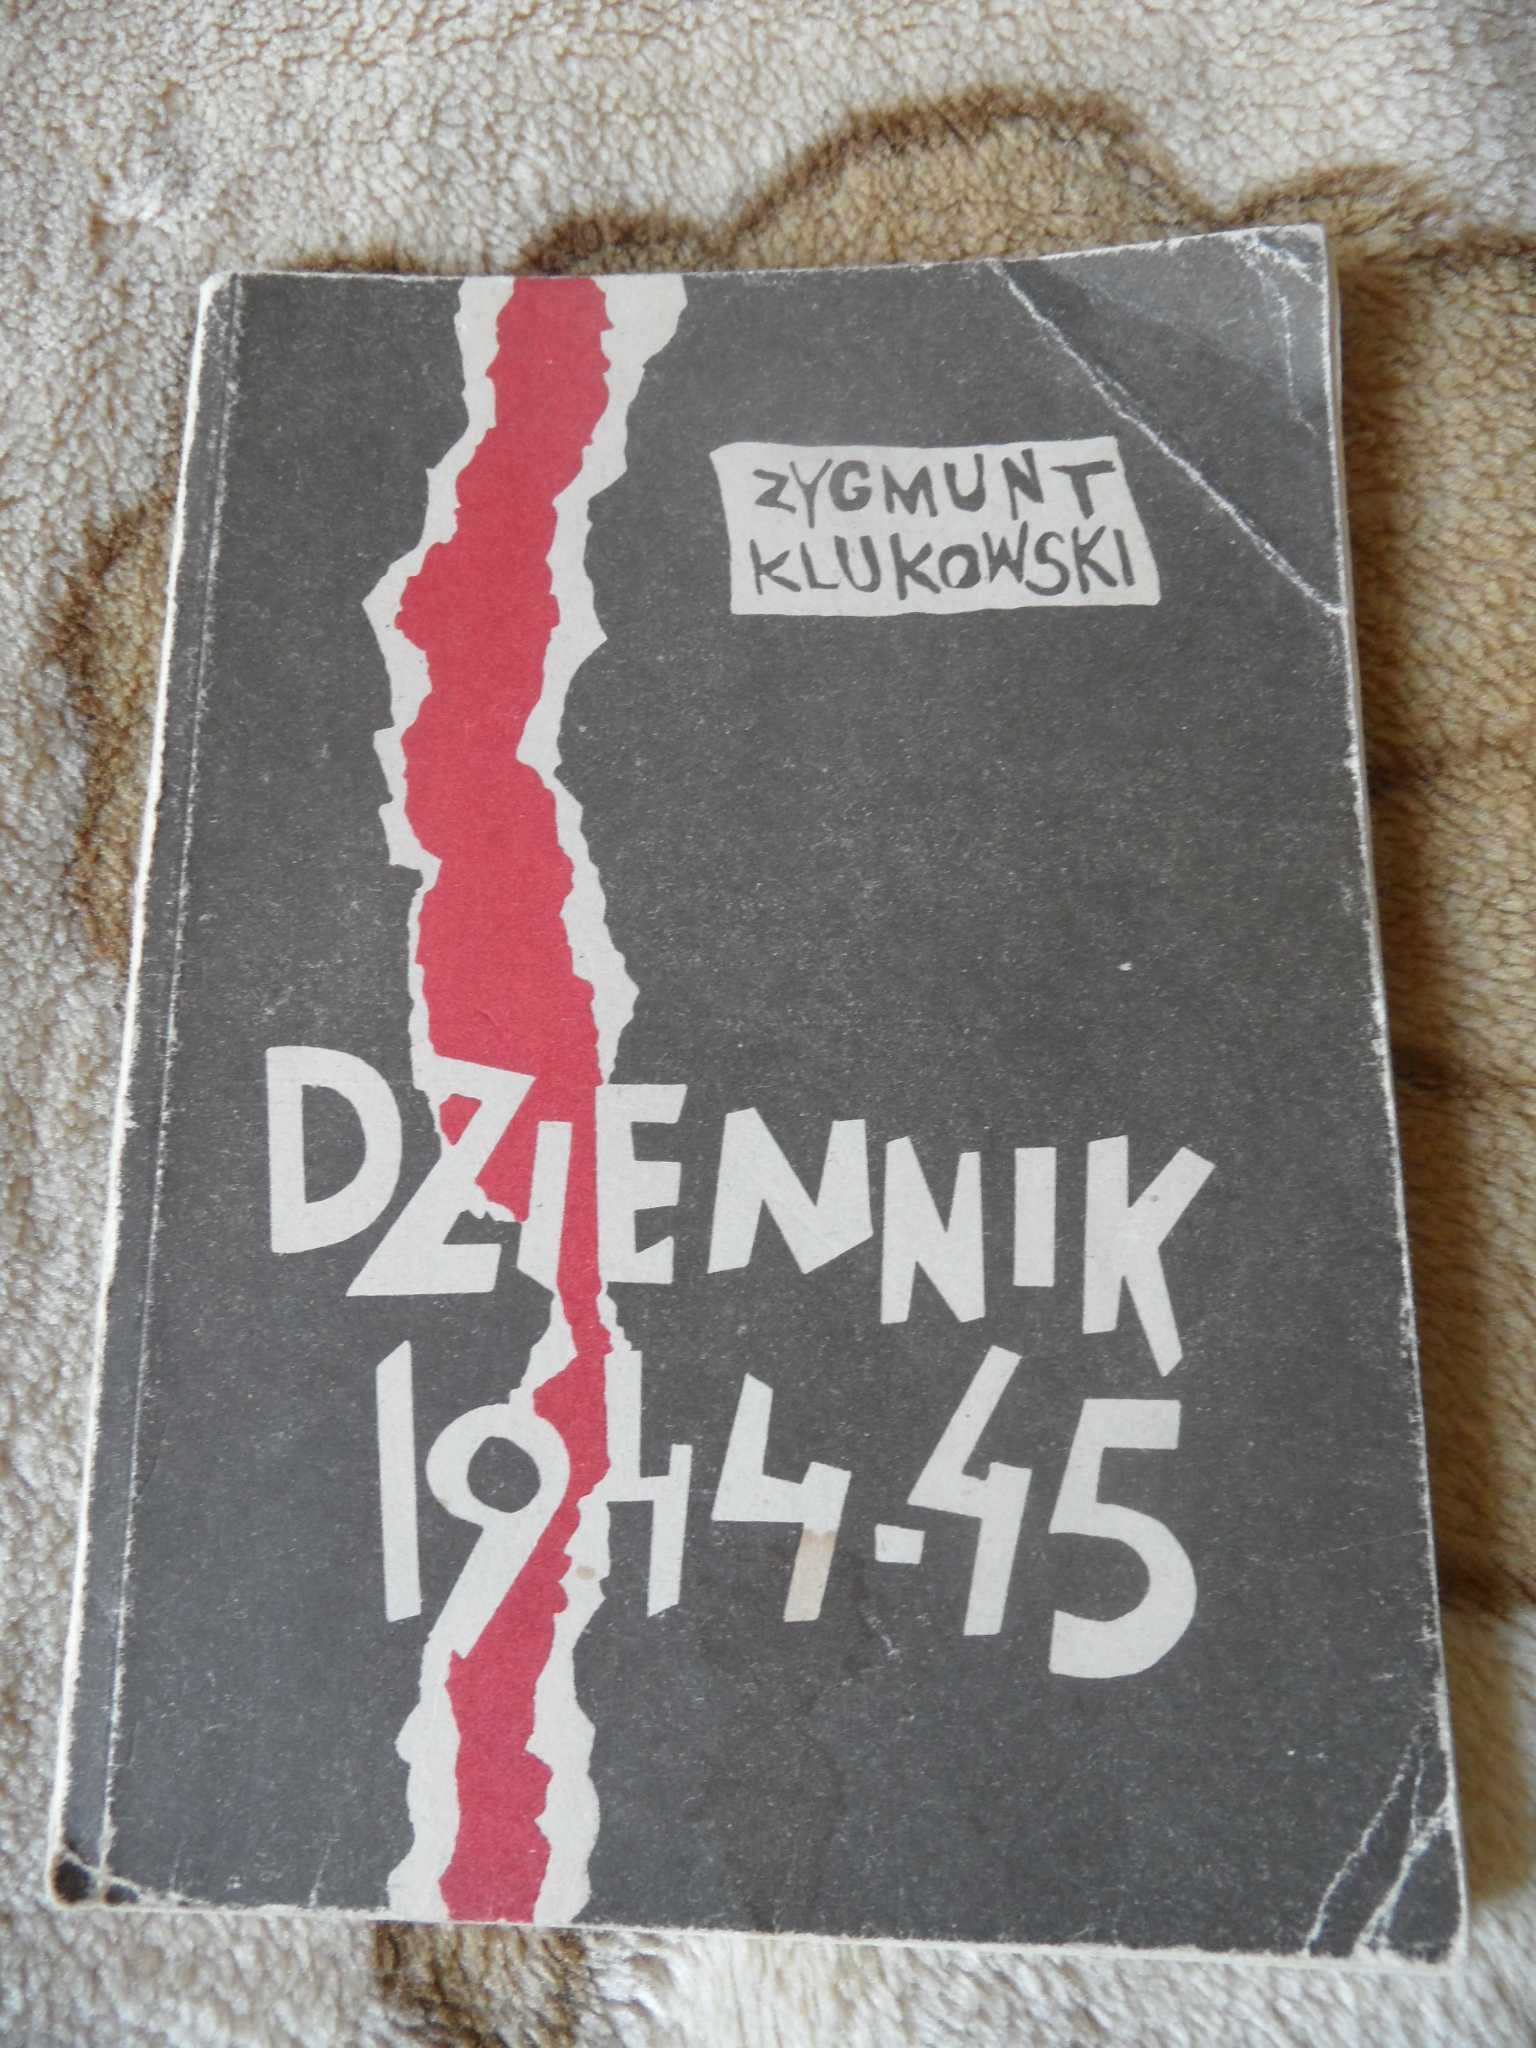 Dziennik 1944-45 Z.Klukowski UNIKAT